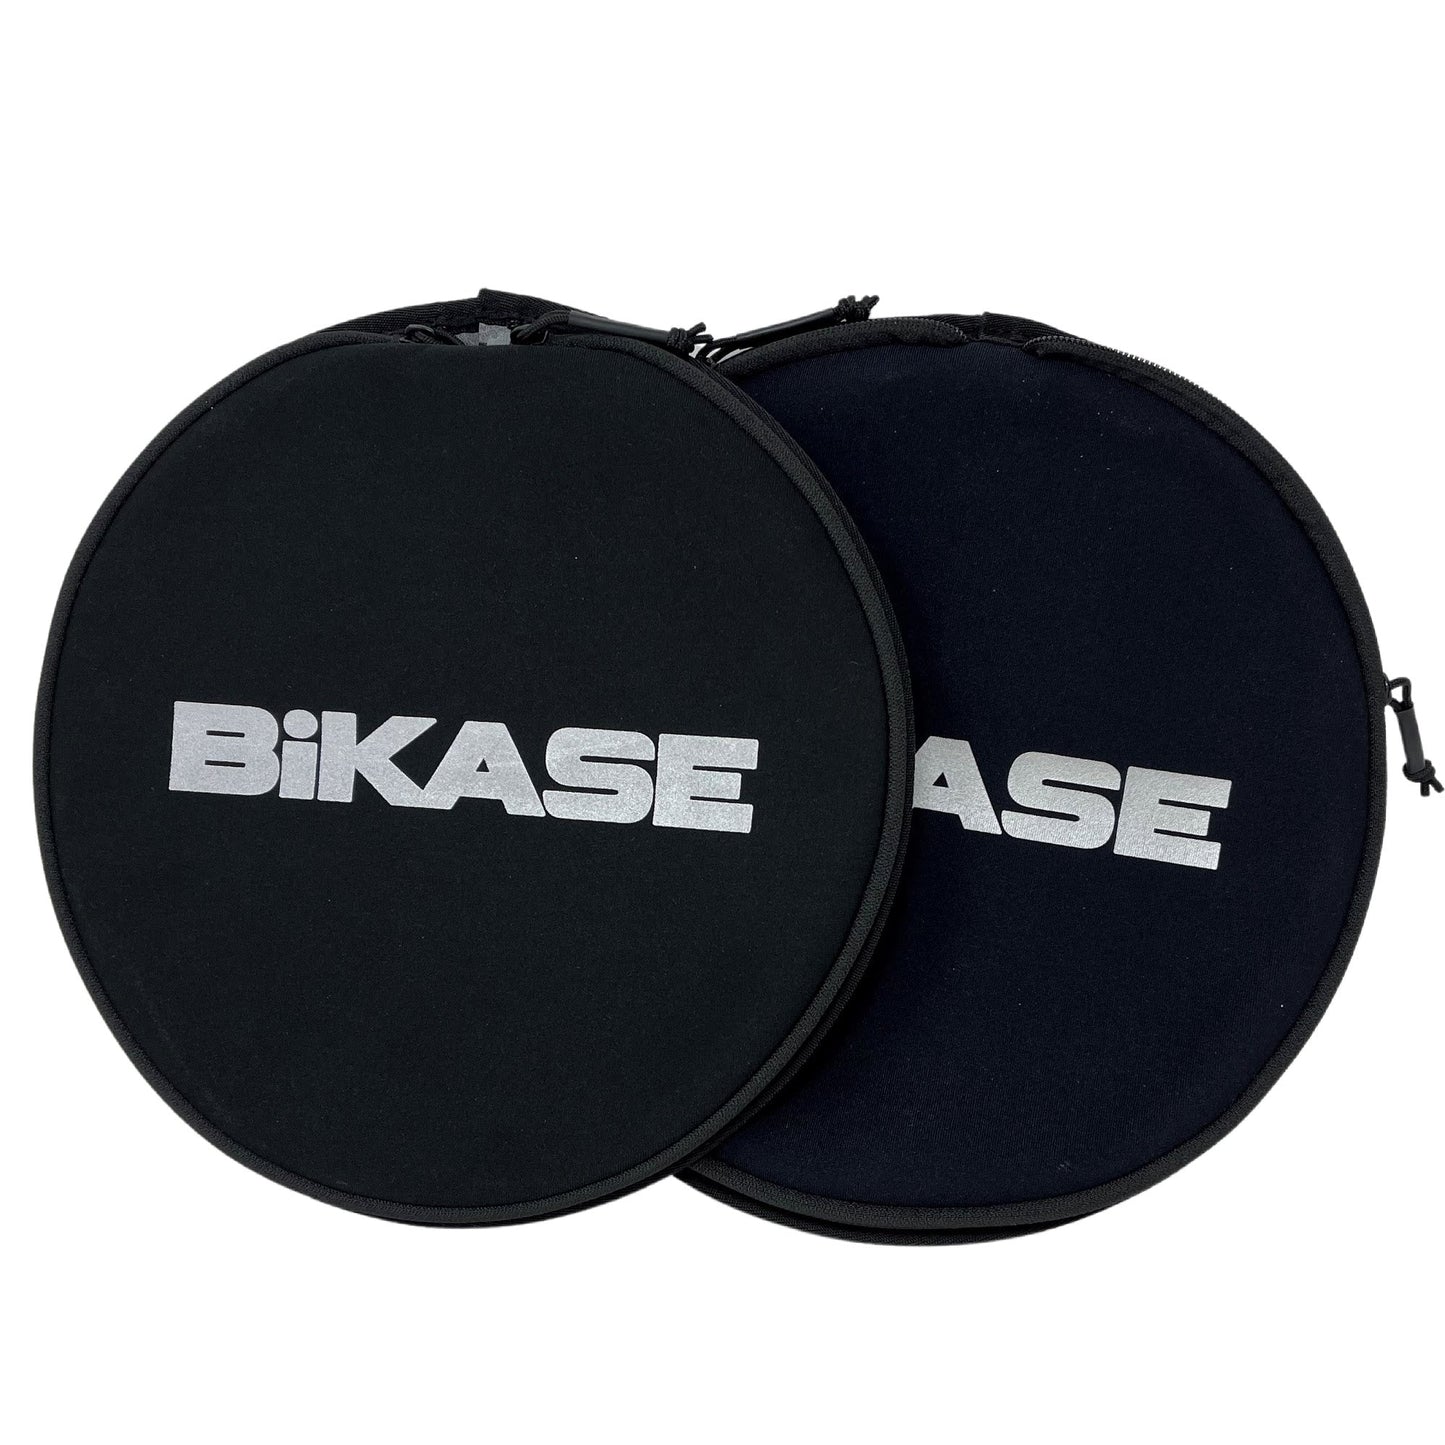 Disc Brake Covers - SET